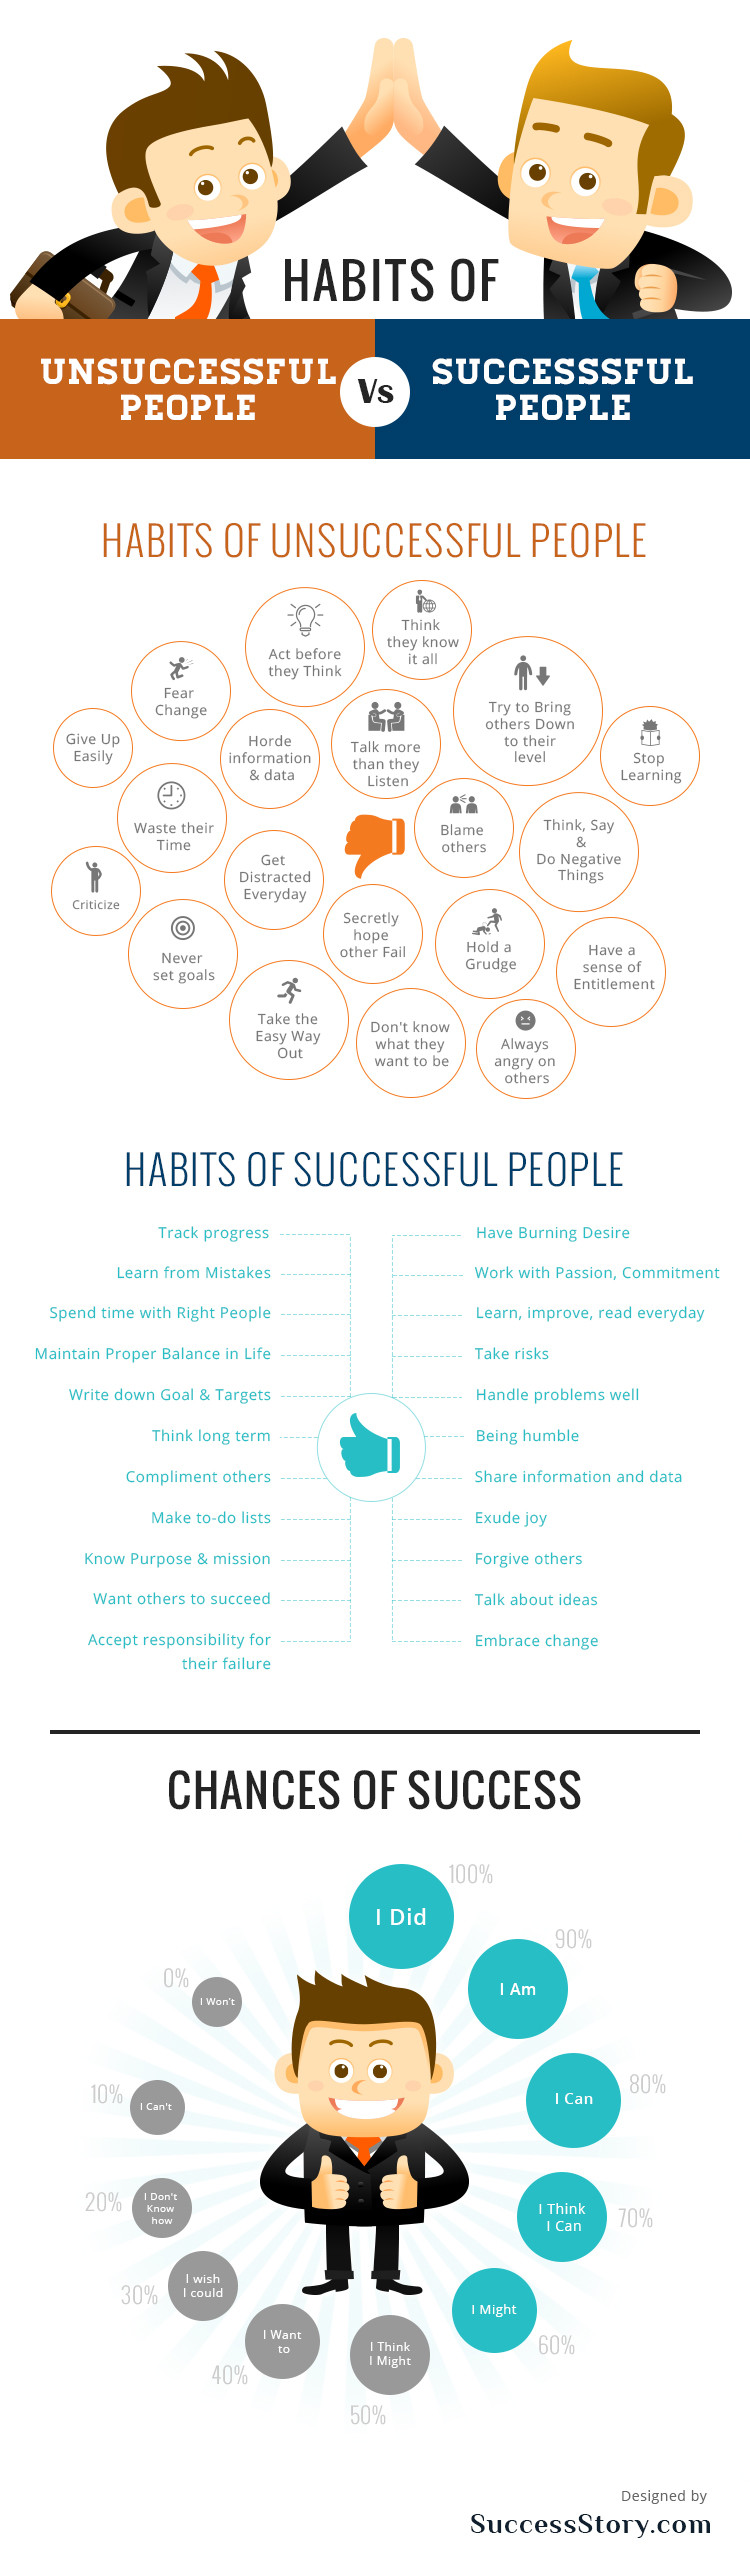 Habits-of-Successful-People1